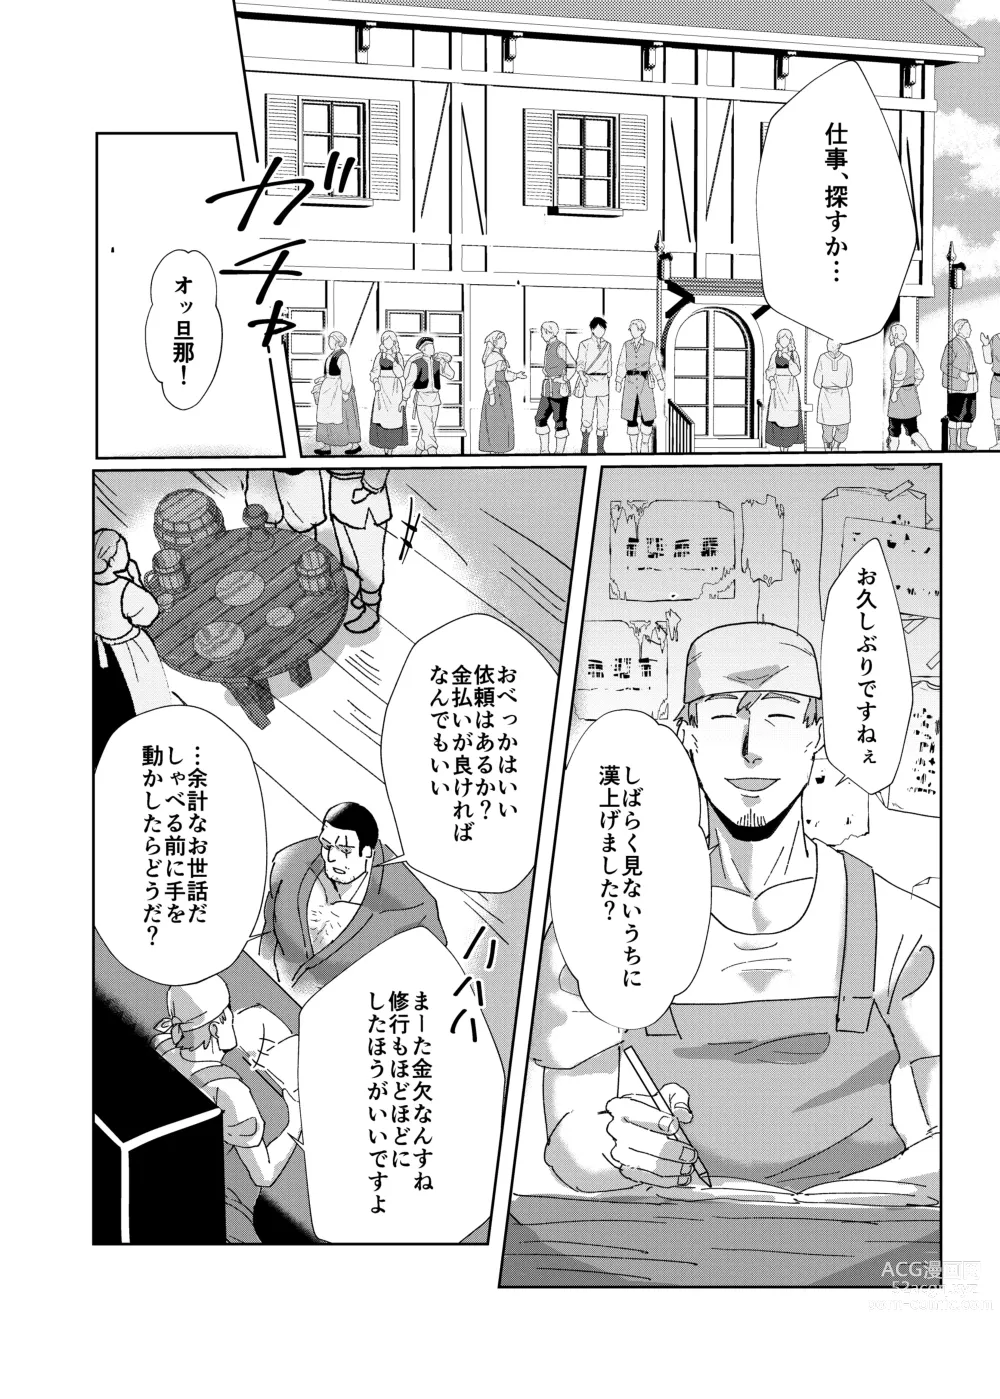 Page 3 of doujinshi Inyoku no Rougoku